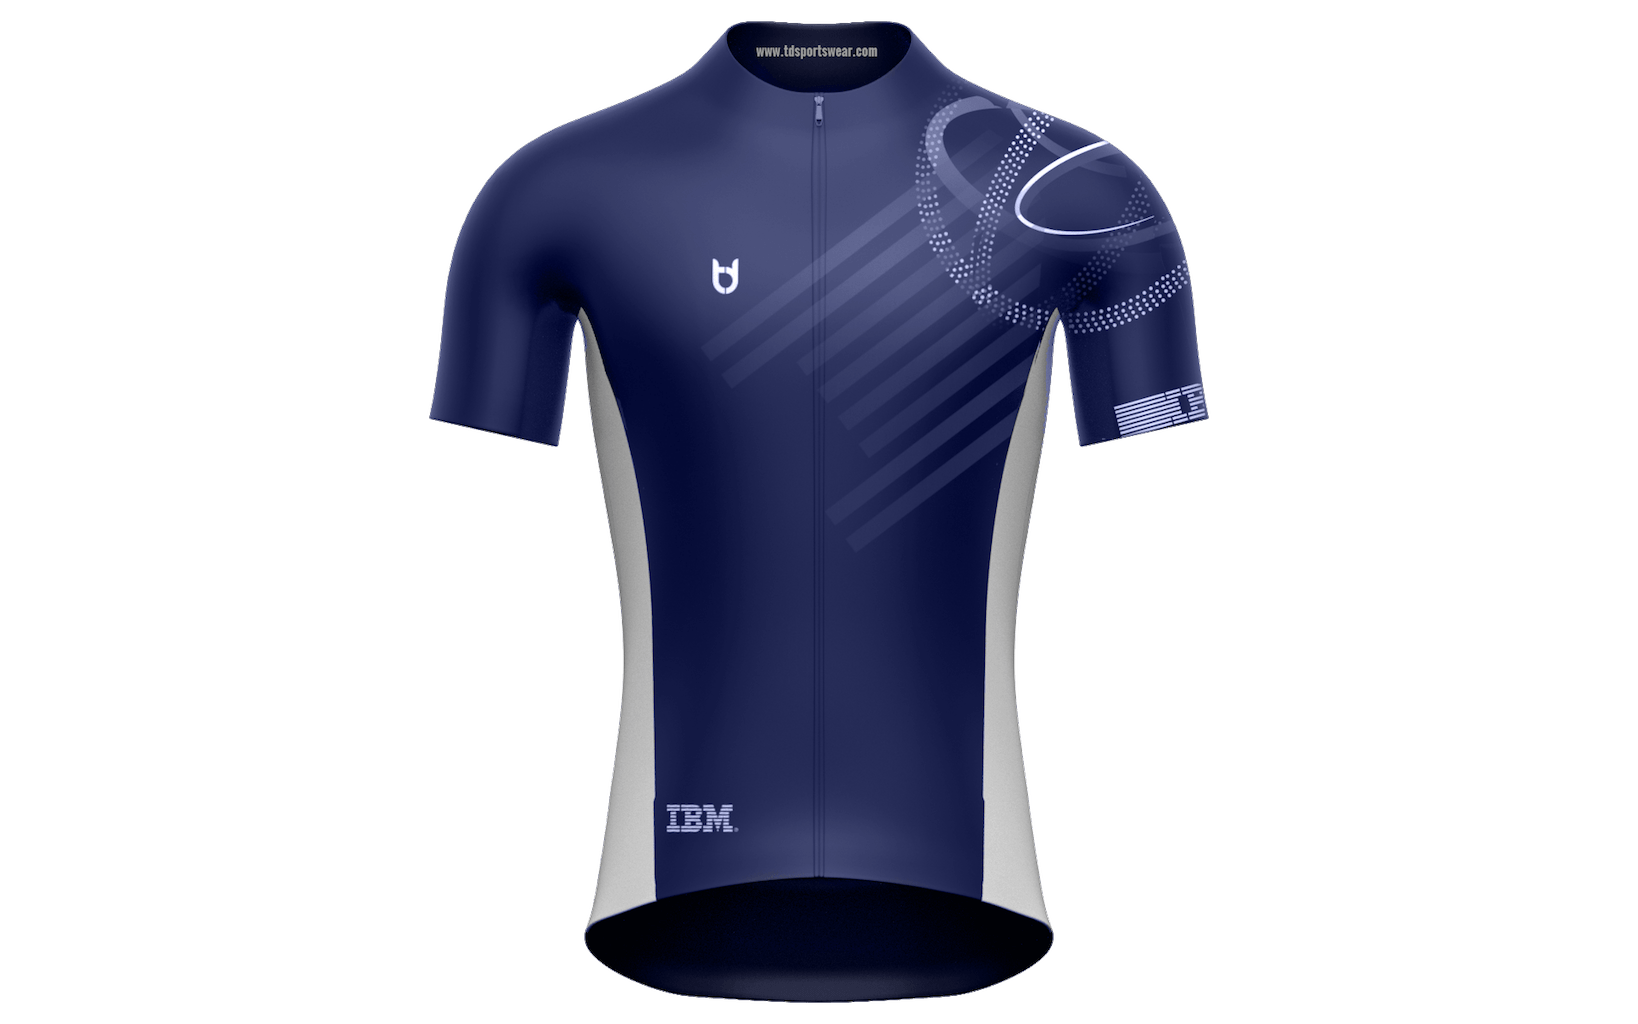 IBM wielershirt td sportswear